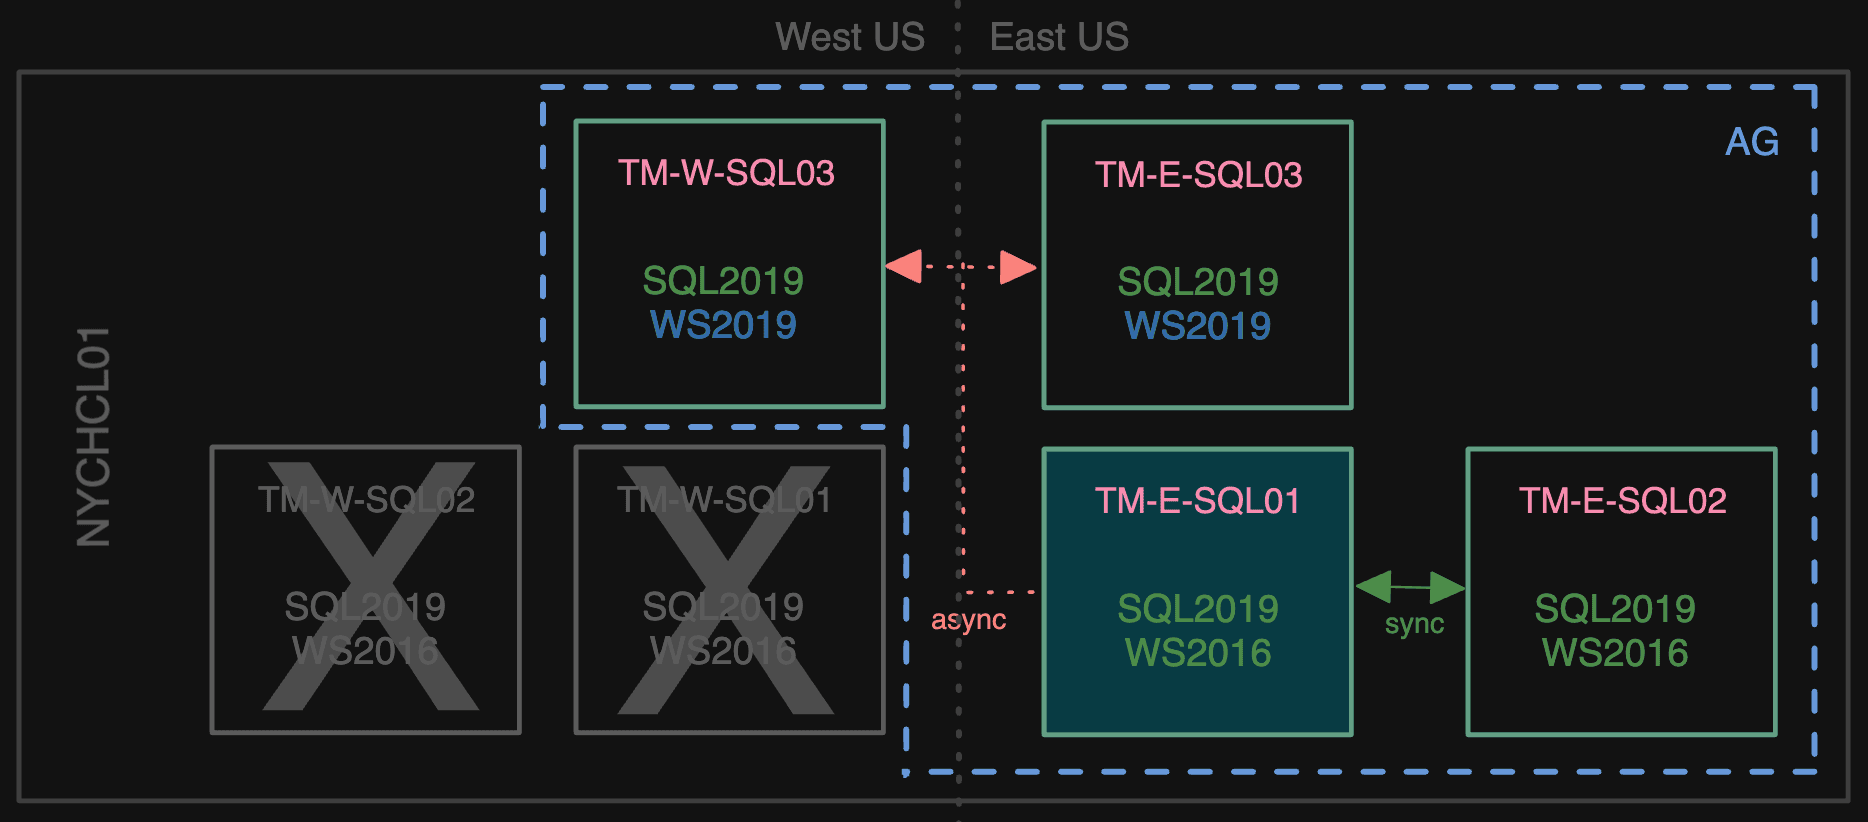 Losing the west 01/02 secondaries